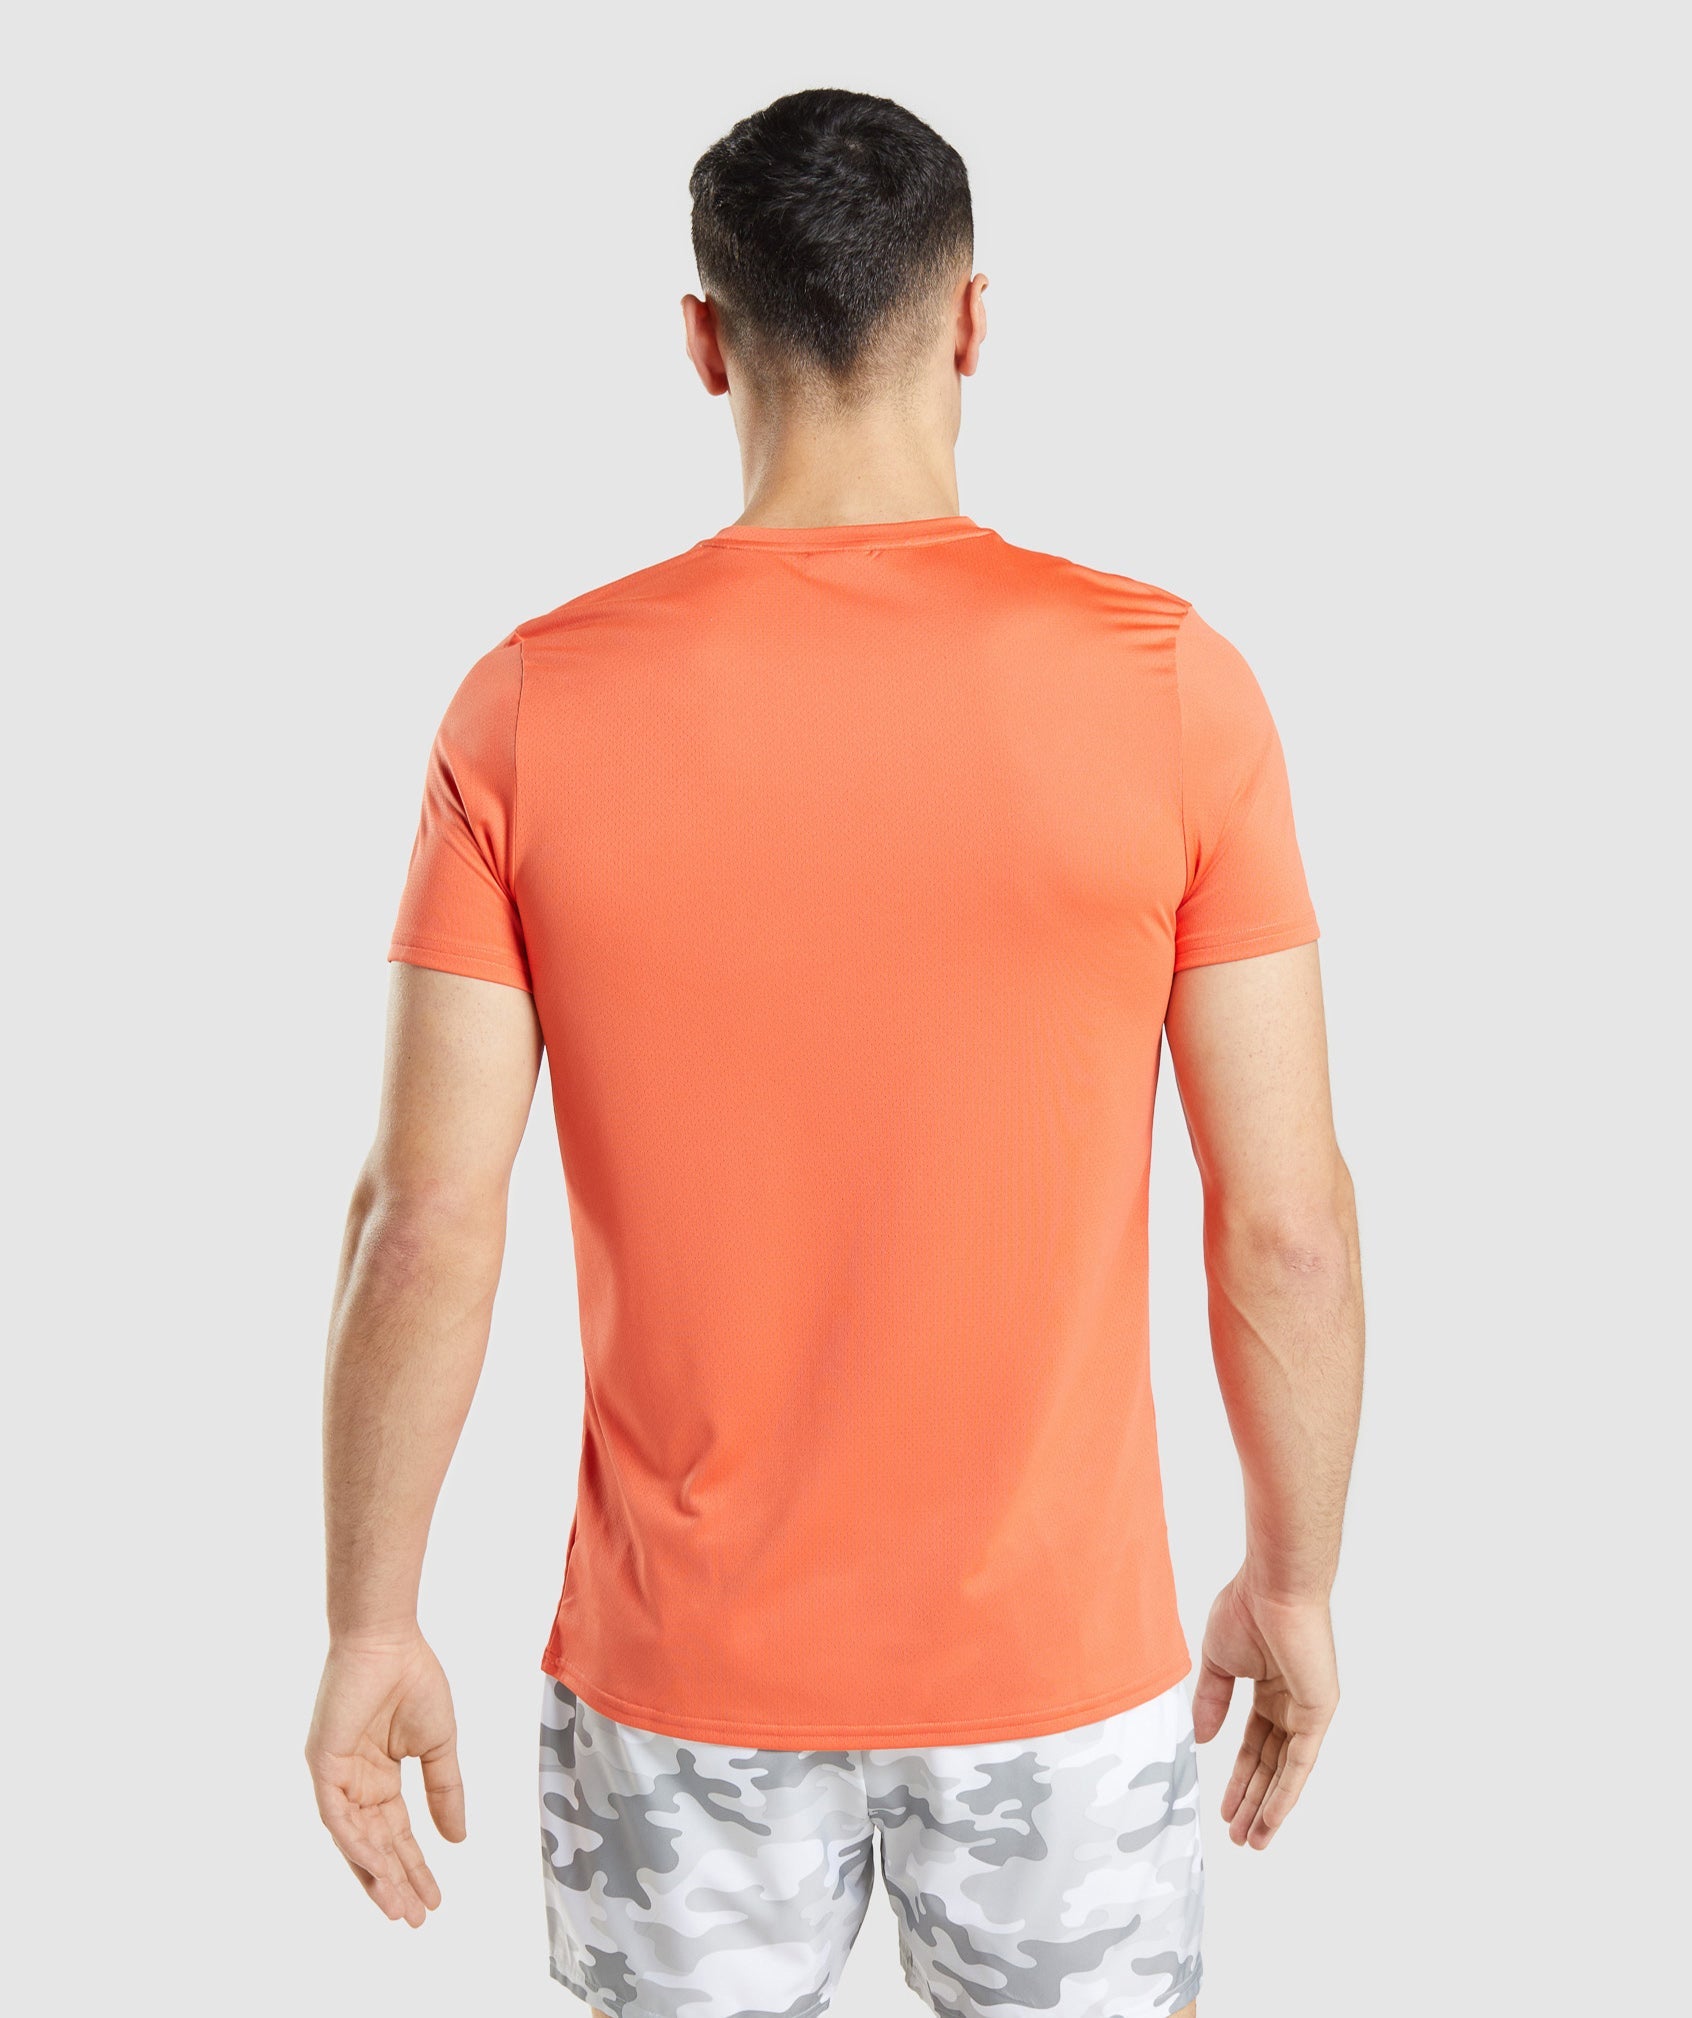 Arrival Graphic T-Shirt in Papaya Orange